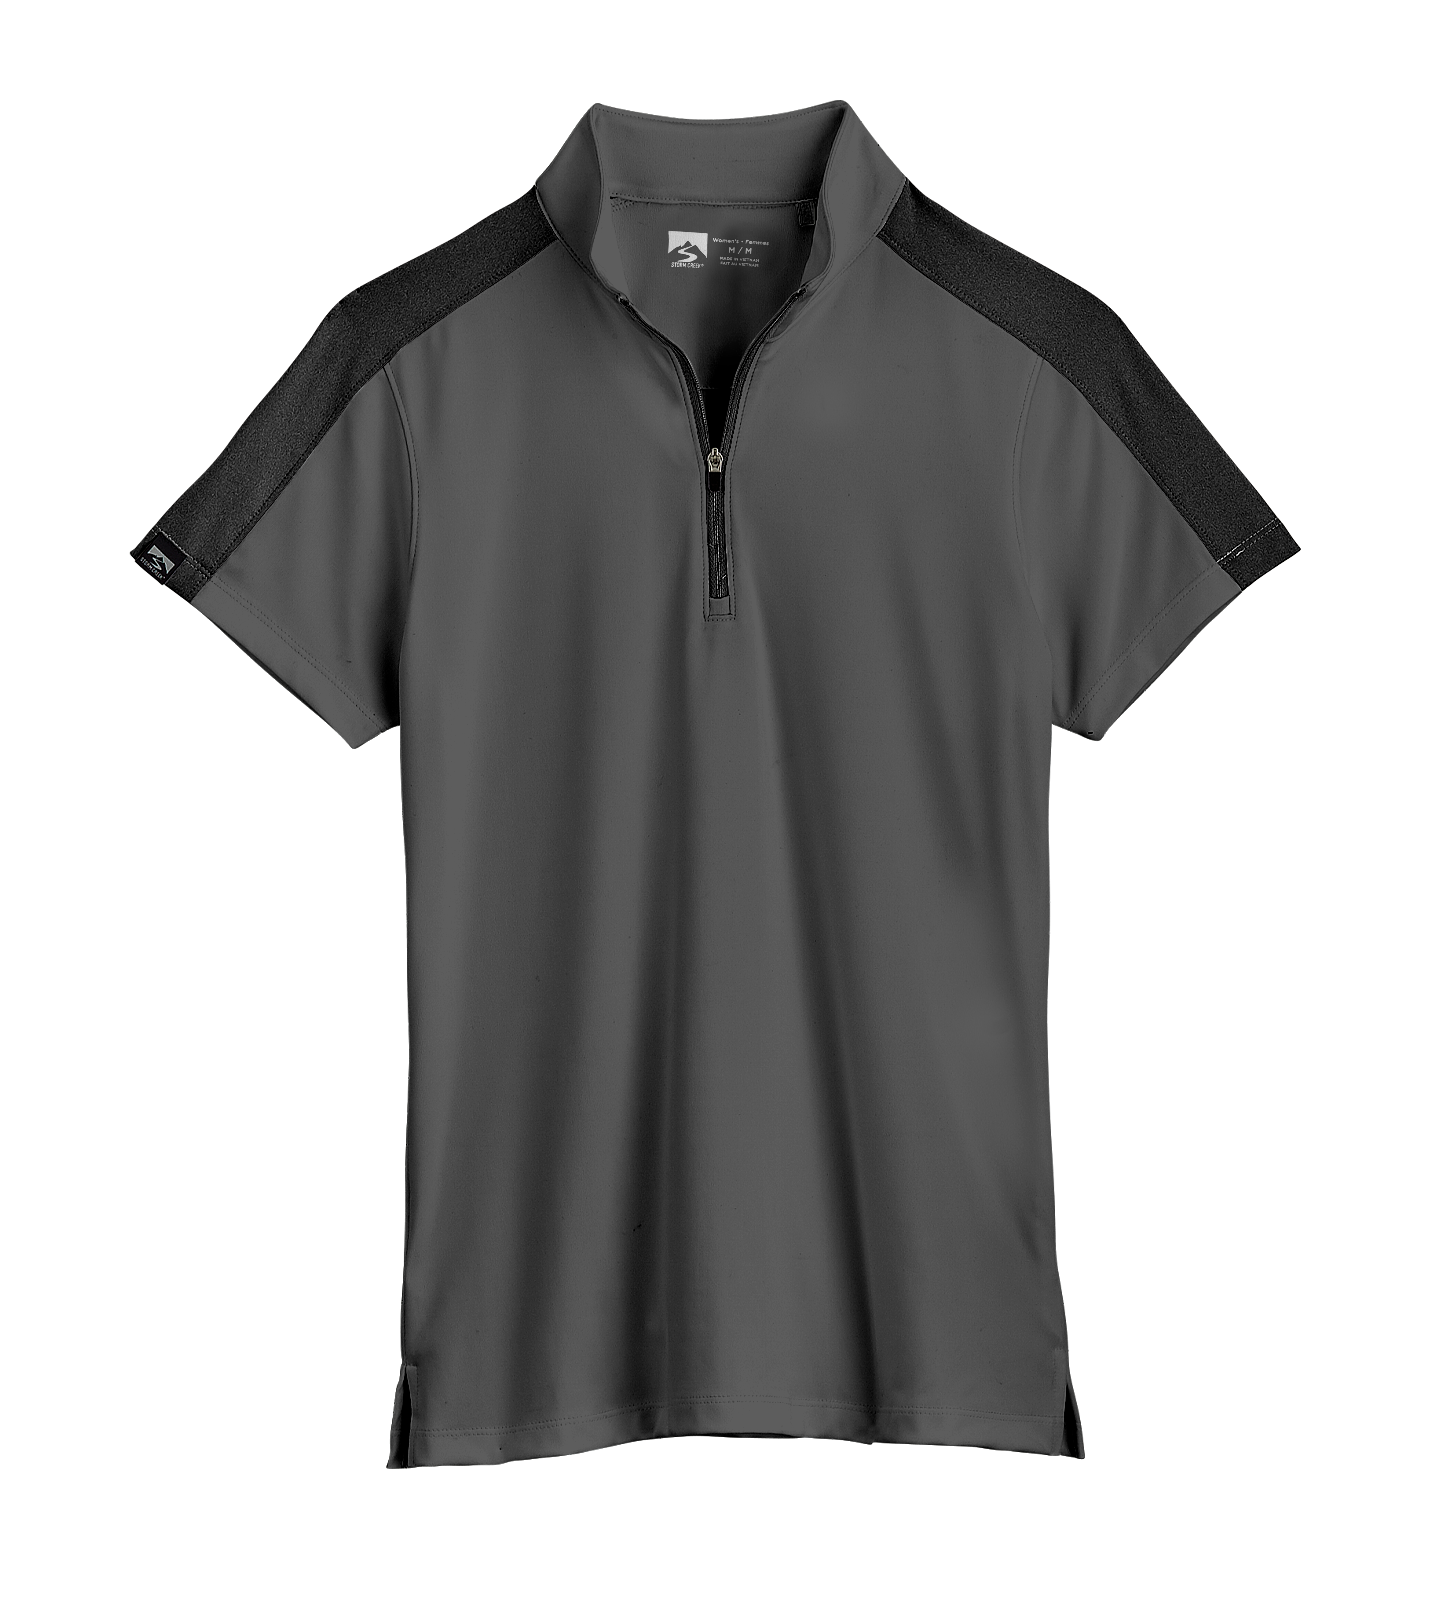 Storm Creek Activator Short-Sleeve Polo Shirt for Ladies - Dark Heather Gray/Black - 2XL